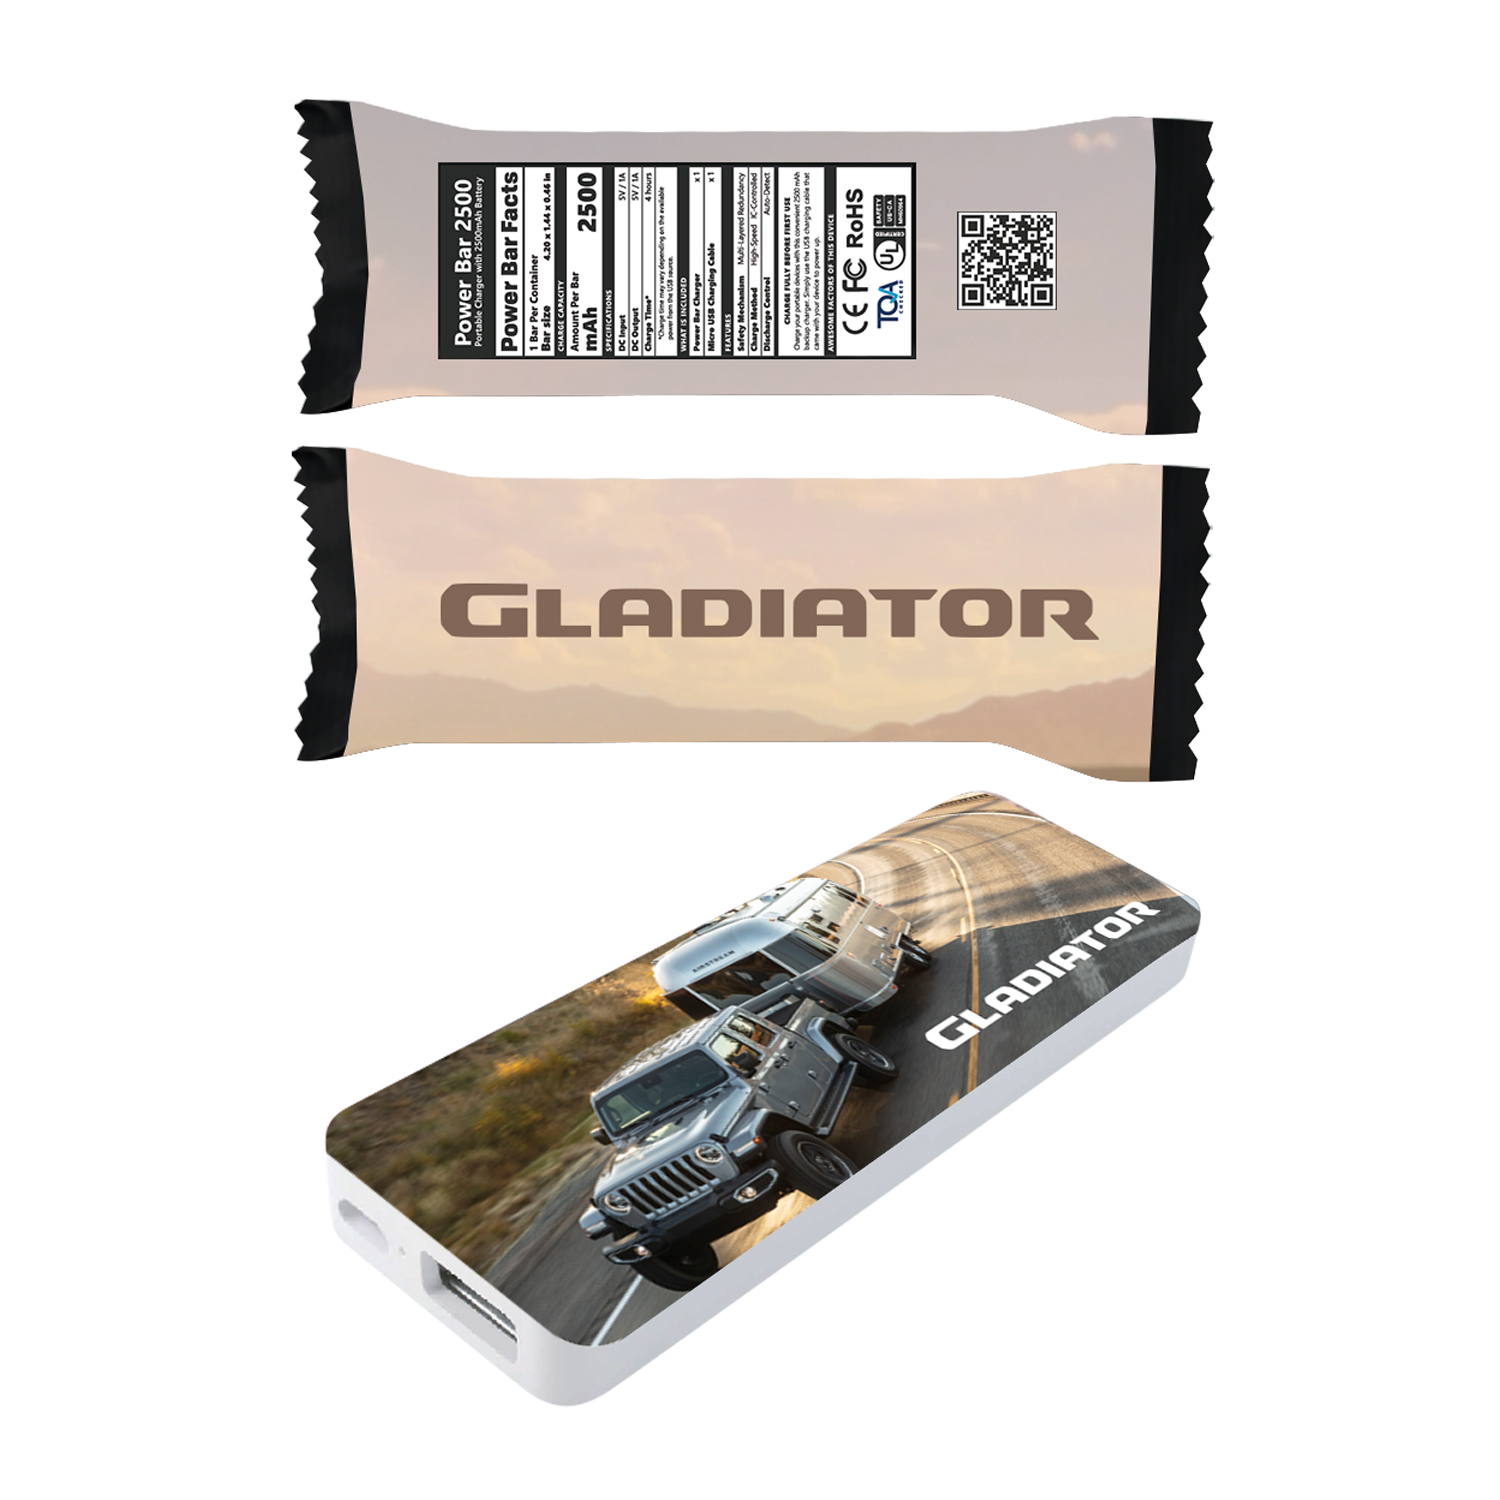 Gladiator Power Bar with Custom Wrapper